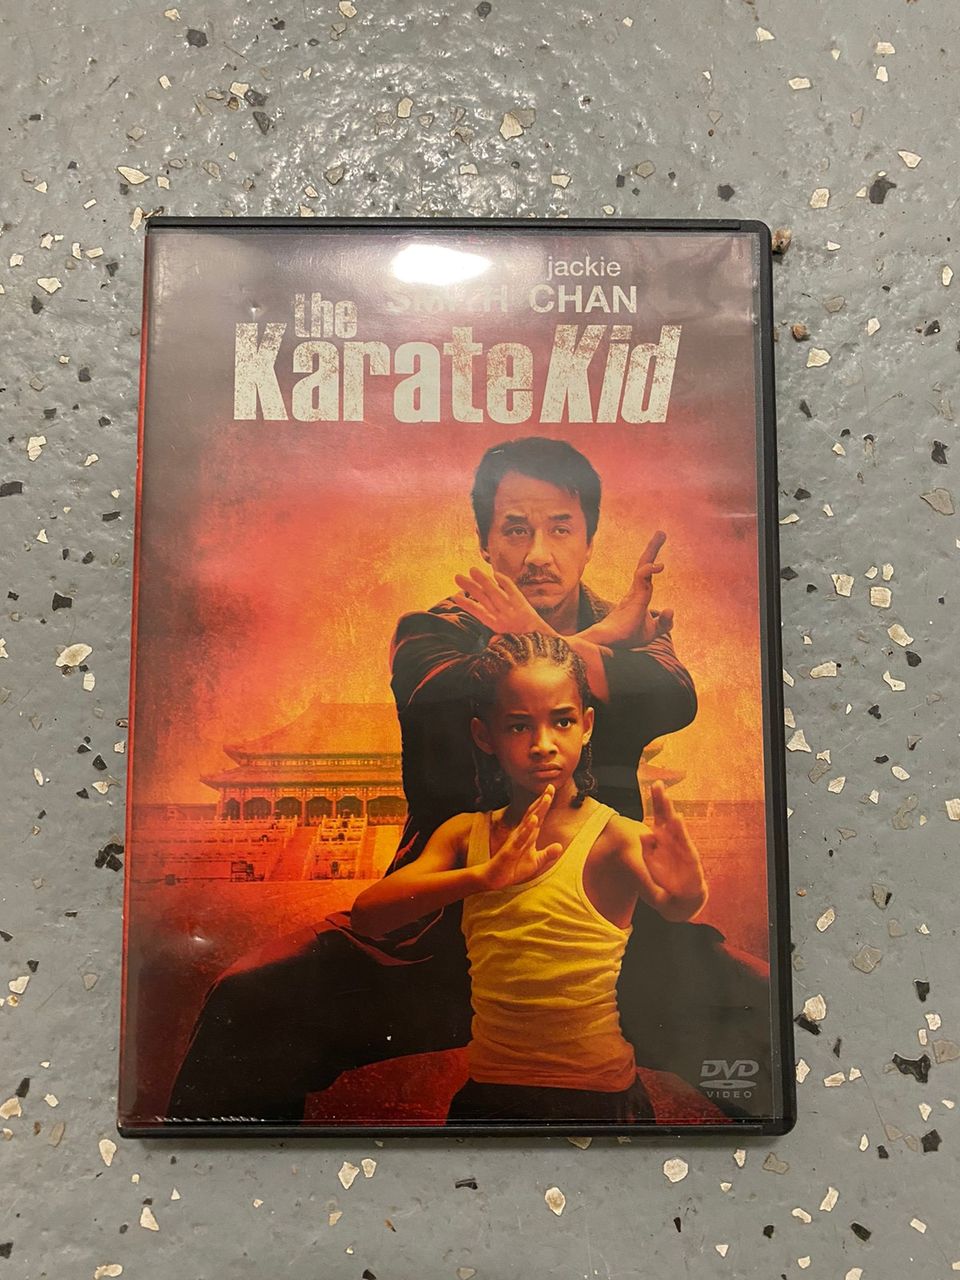 Karate kid dvd